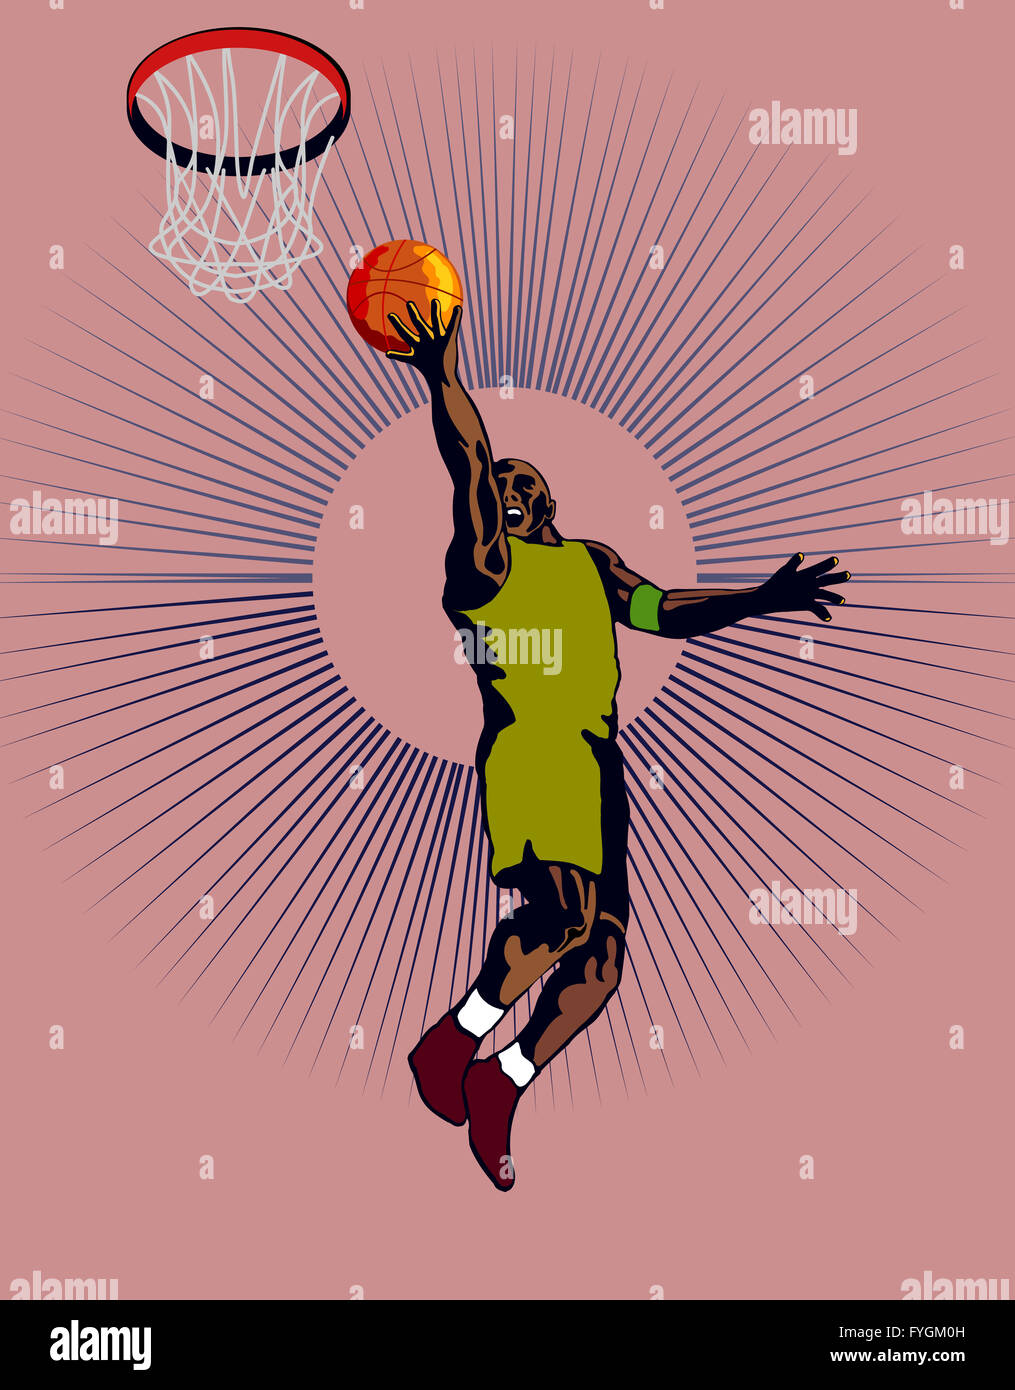 Basketball Player Dunking Stock Photo